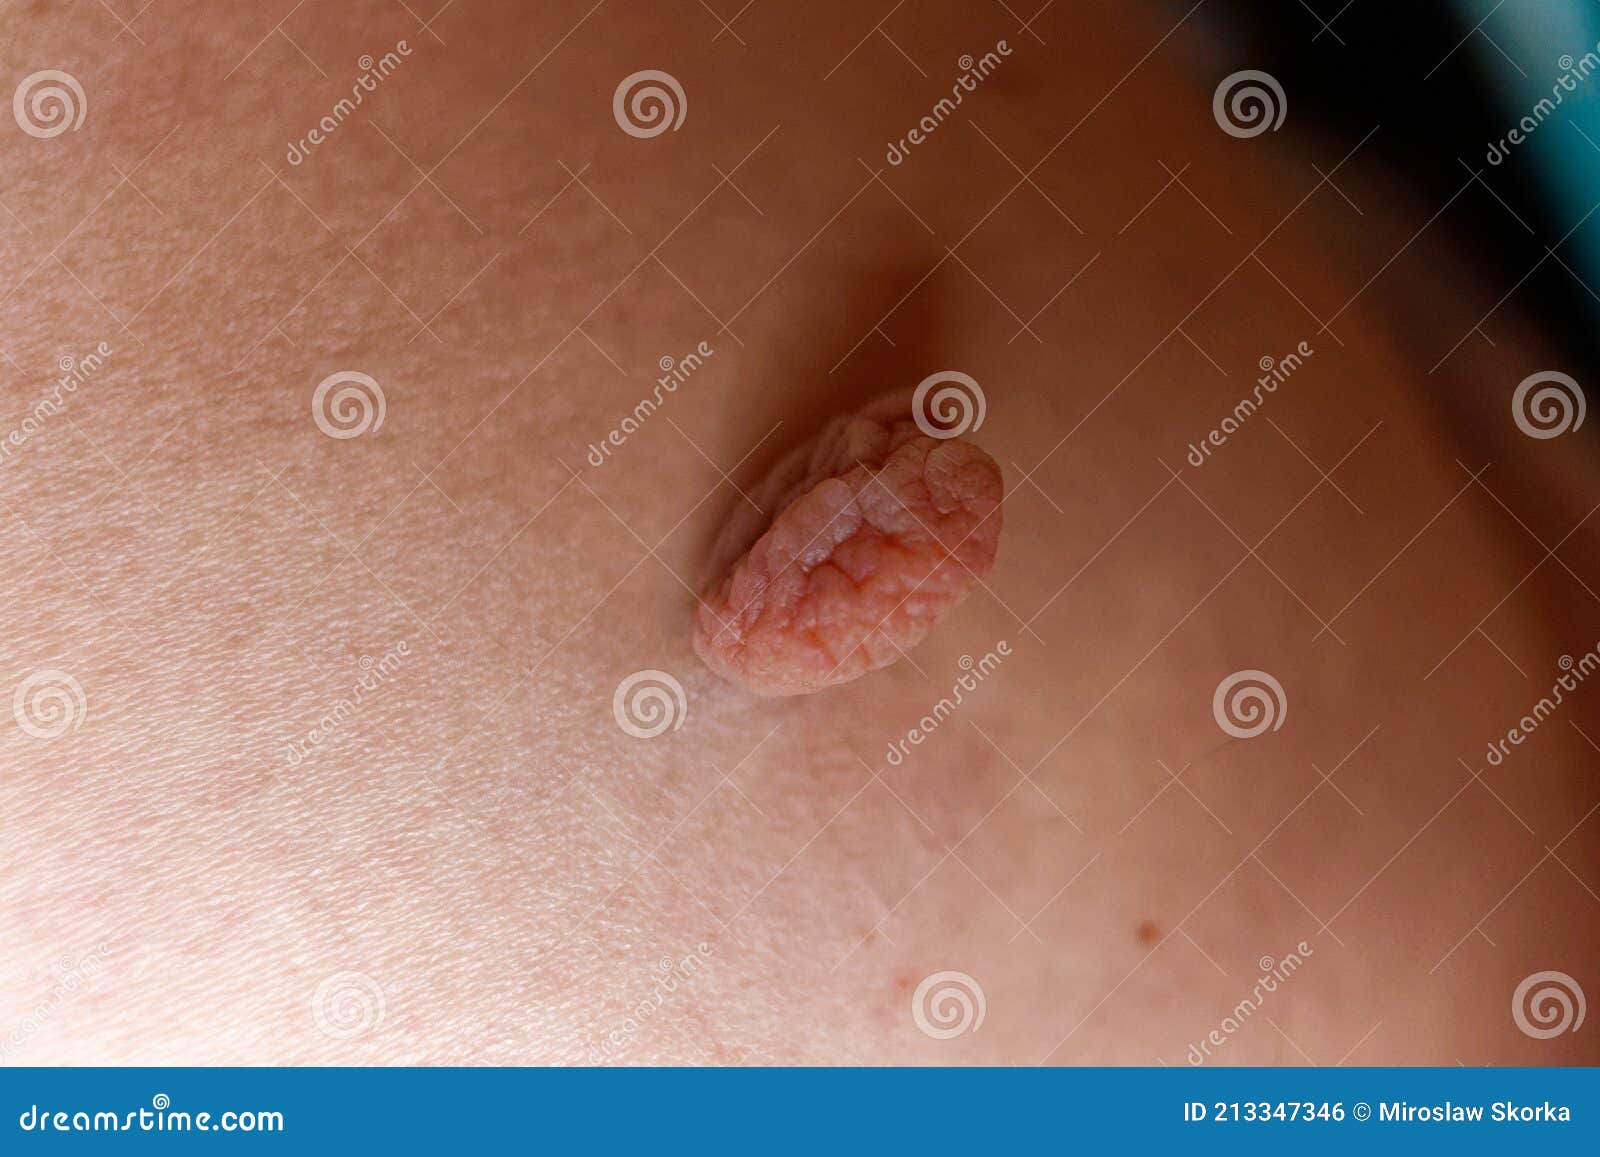 skin nodule on a buttock